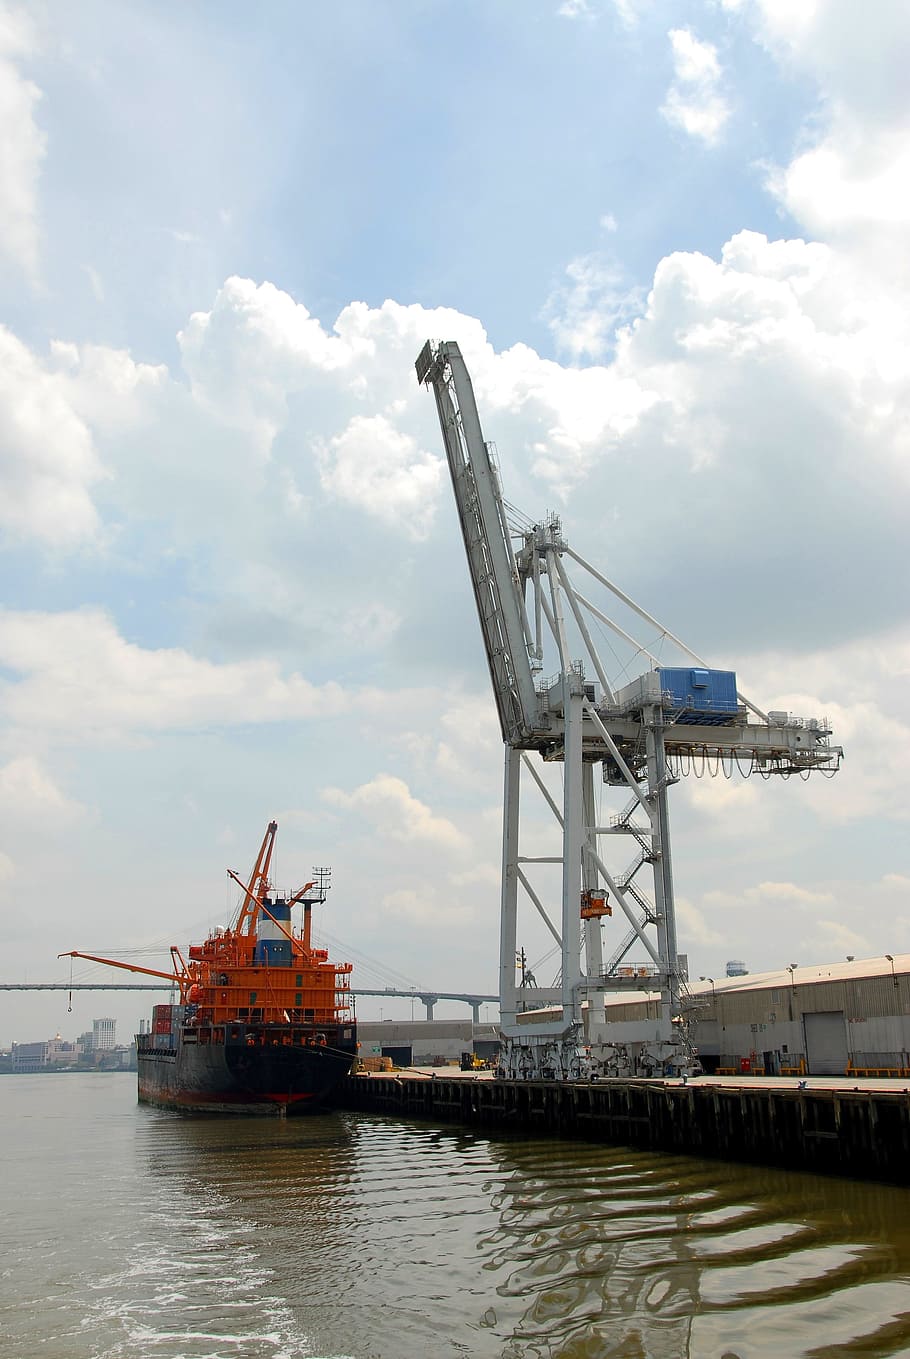 Ship Yard, Crane, Savannah, Georgia, shipping, industry, transportation